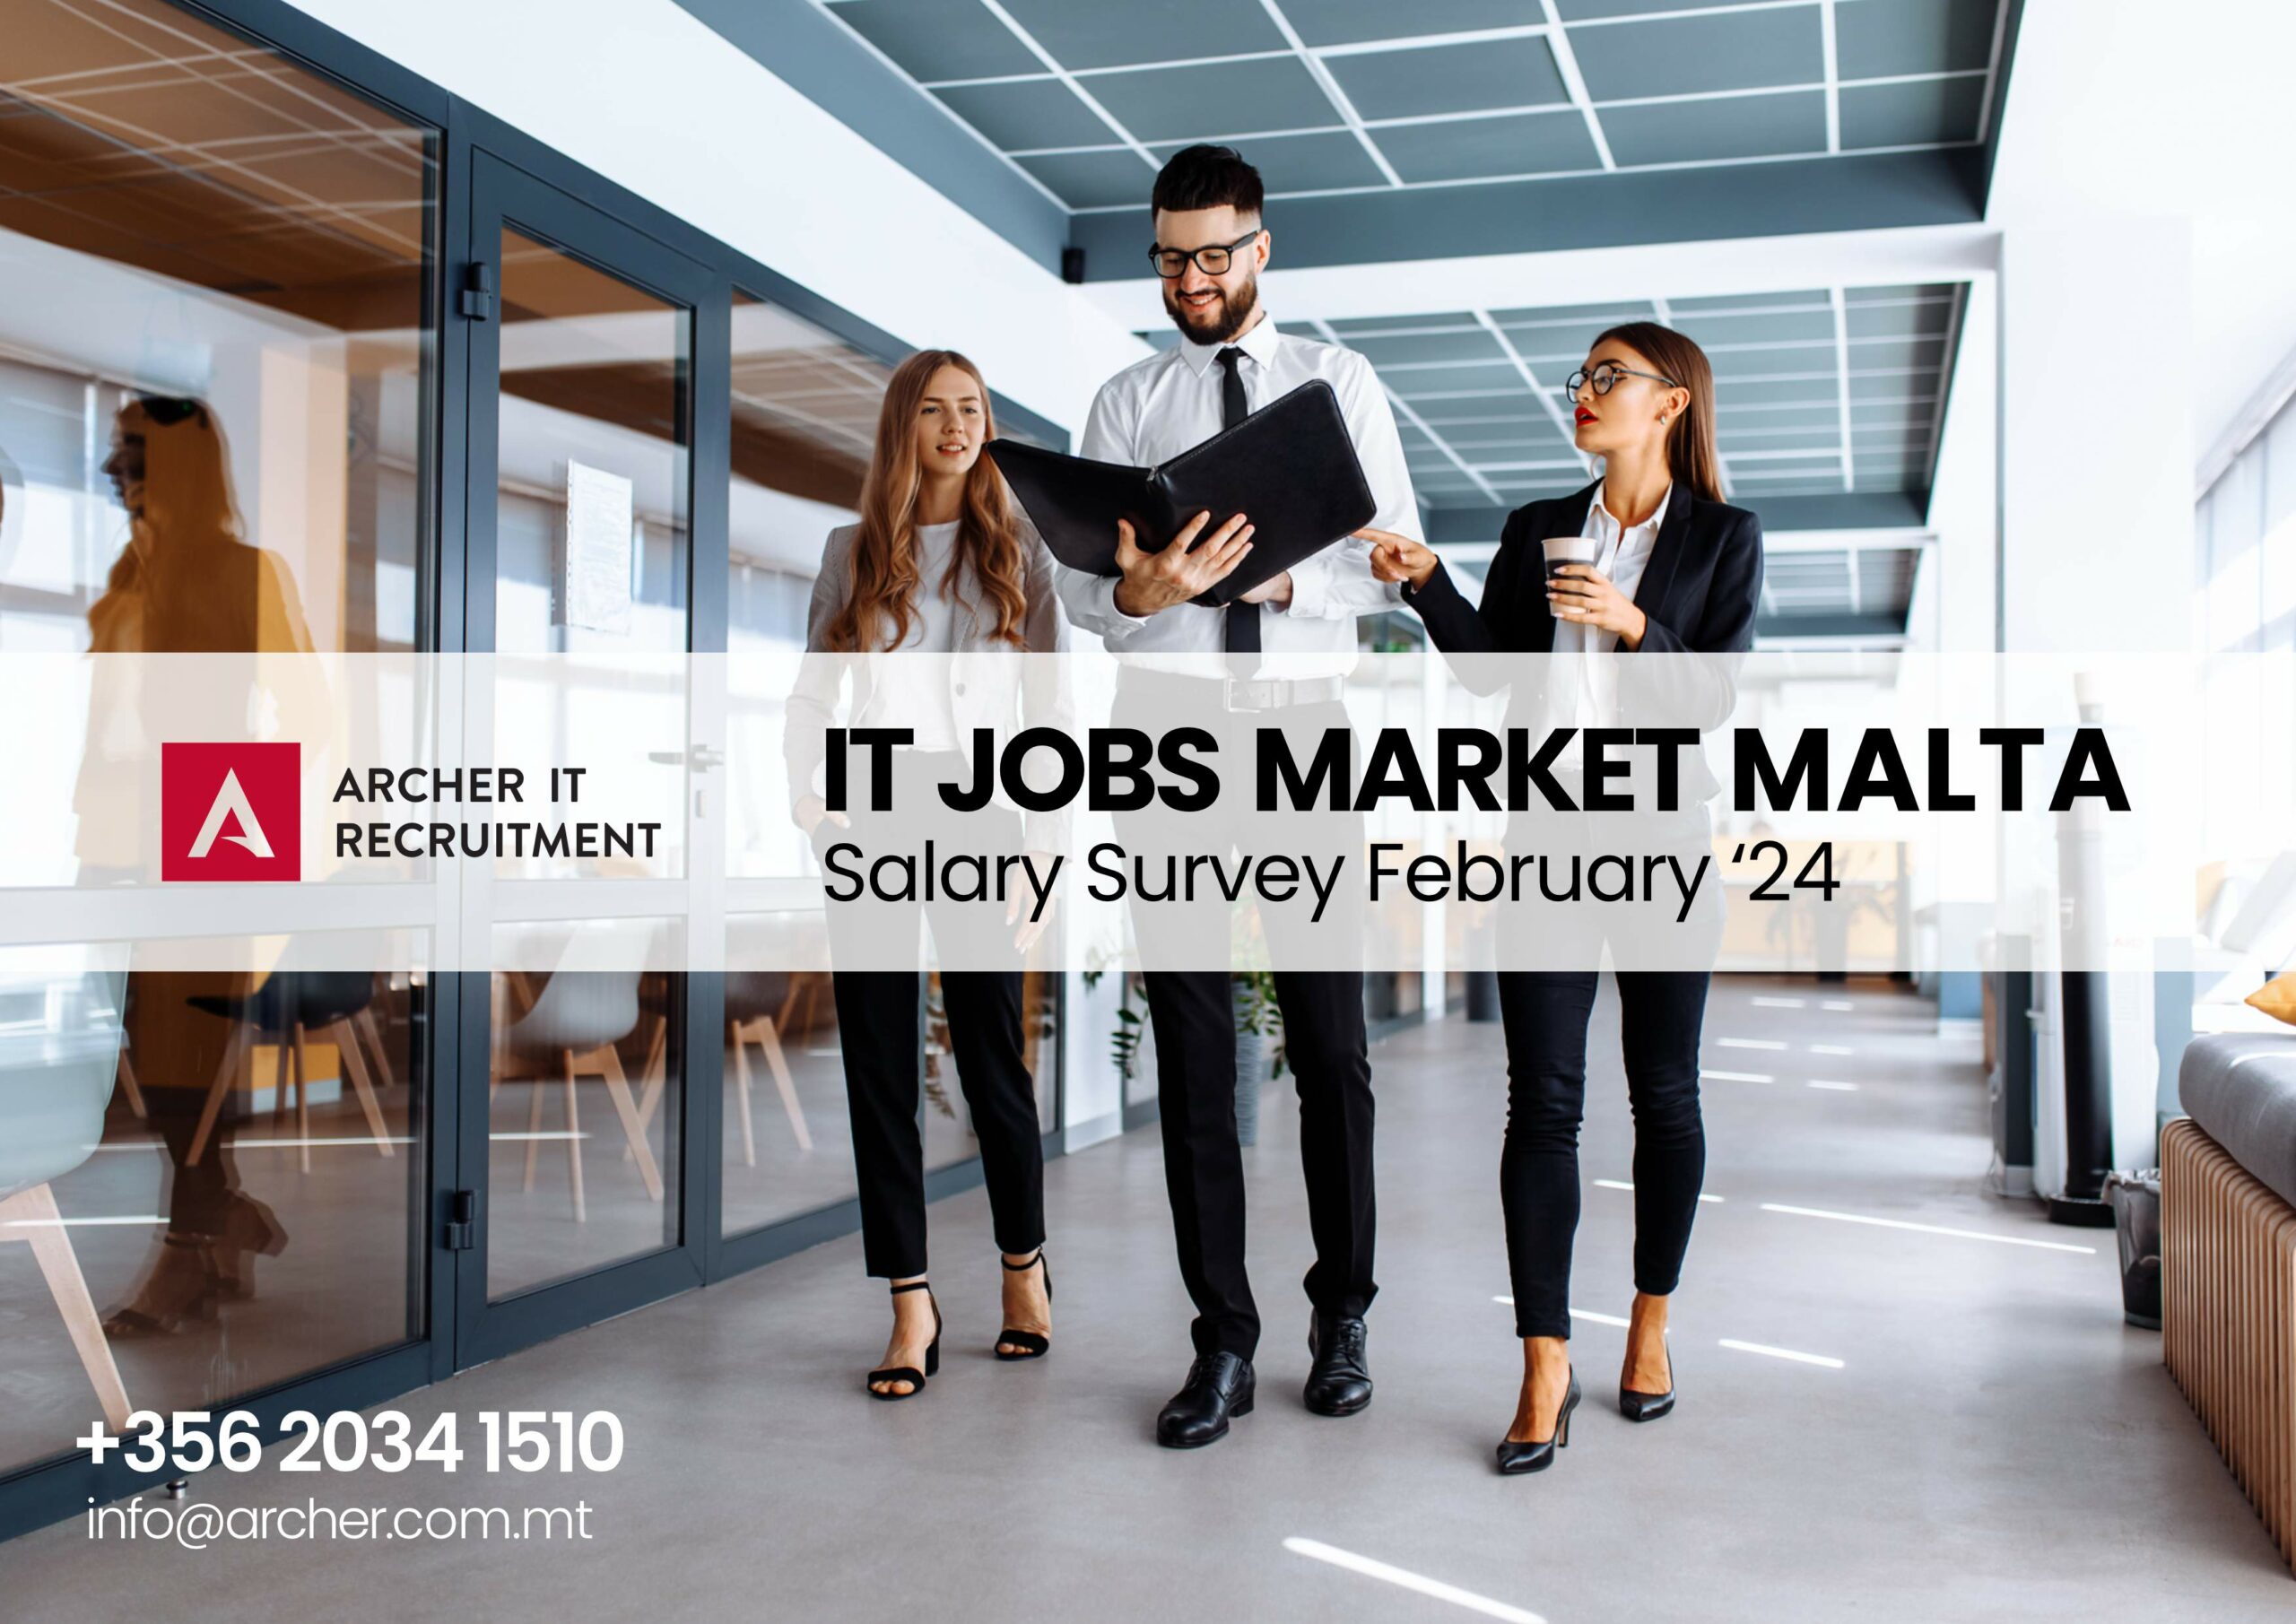 Archer IT Recruitment Malta Salary Survey April 2023